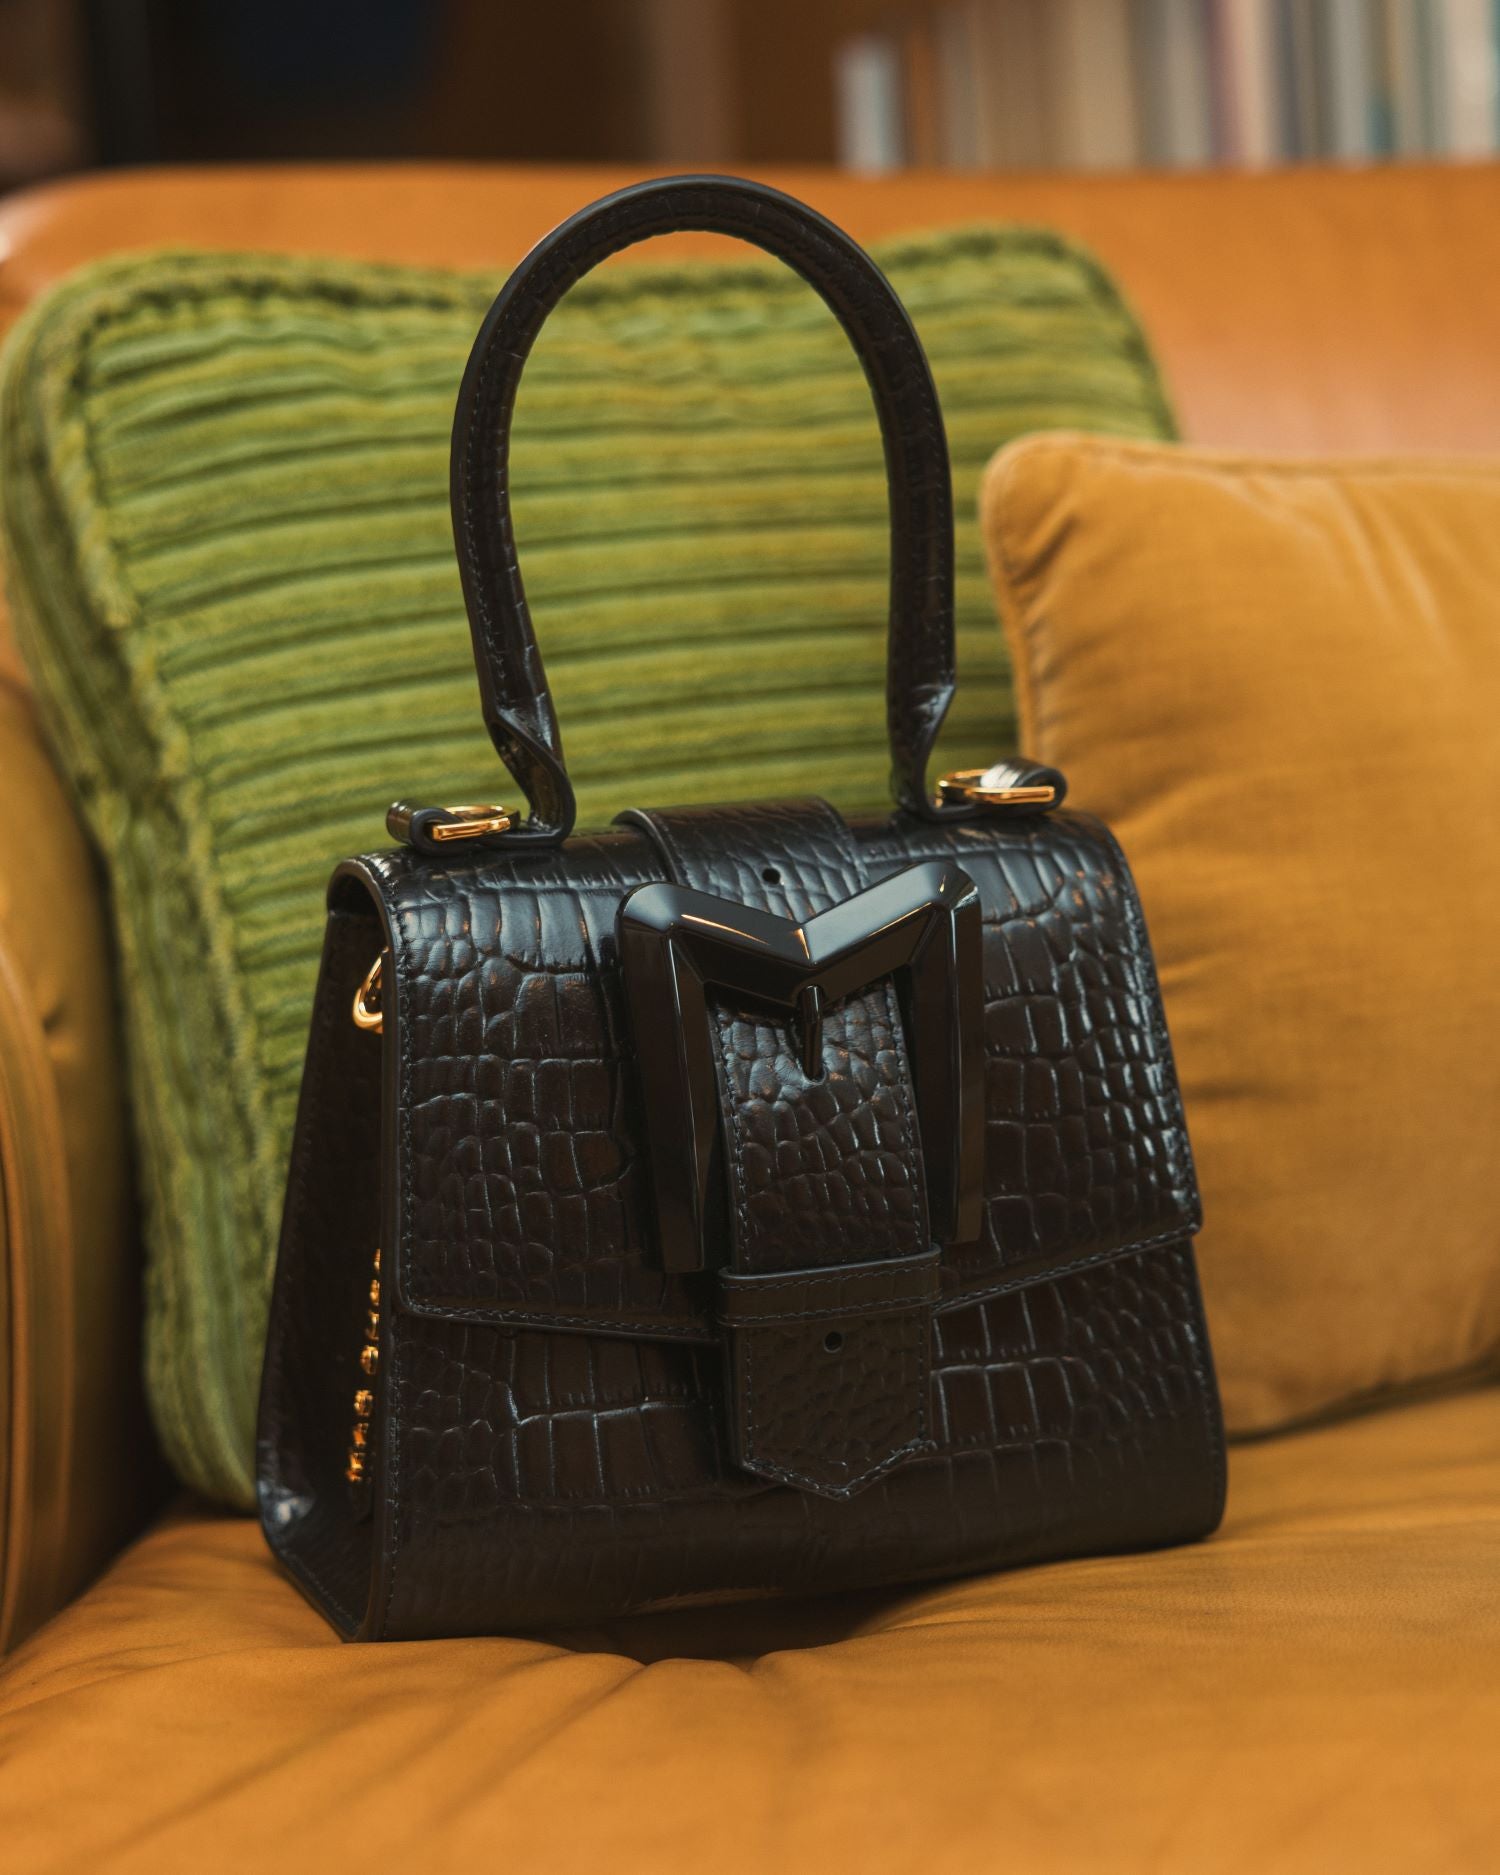 Buckled Mini Croco Black Leather Handbag with Detachable Strap